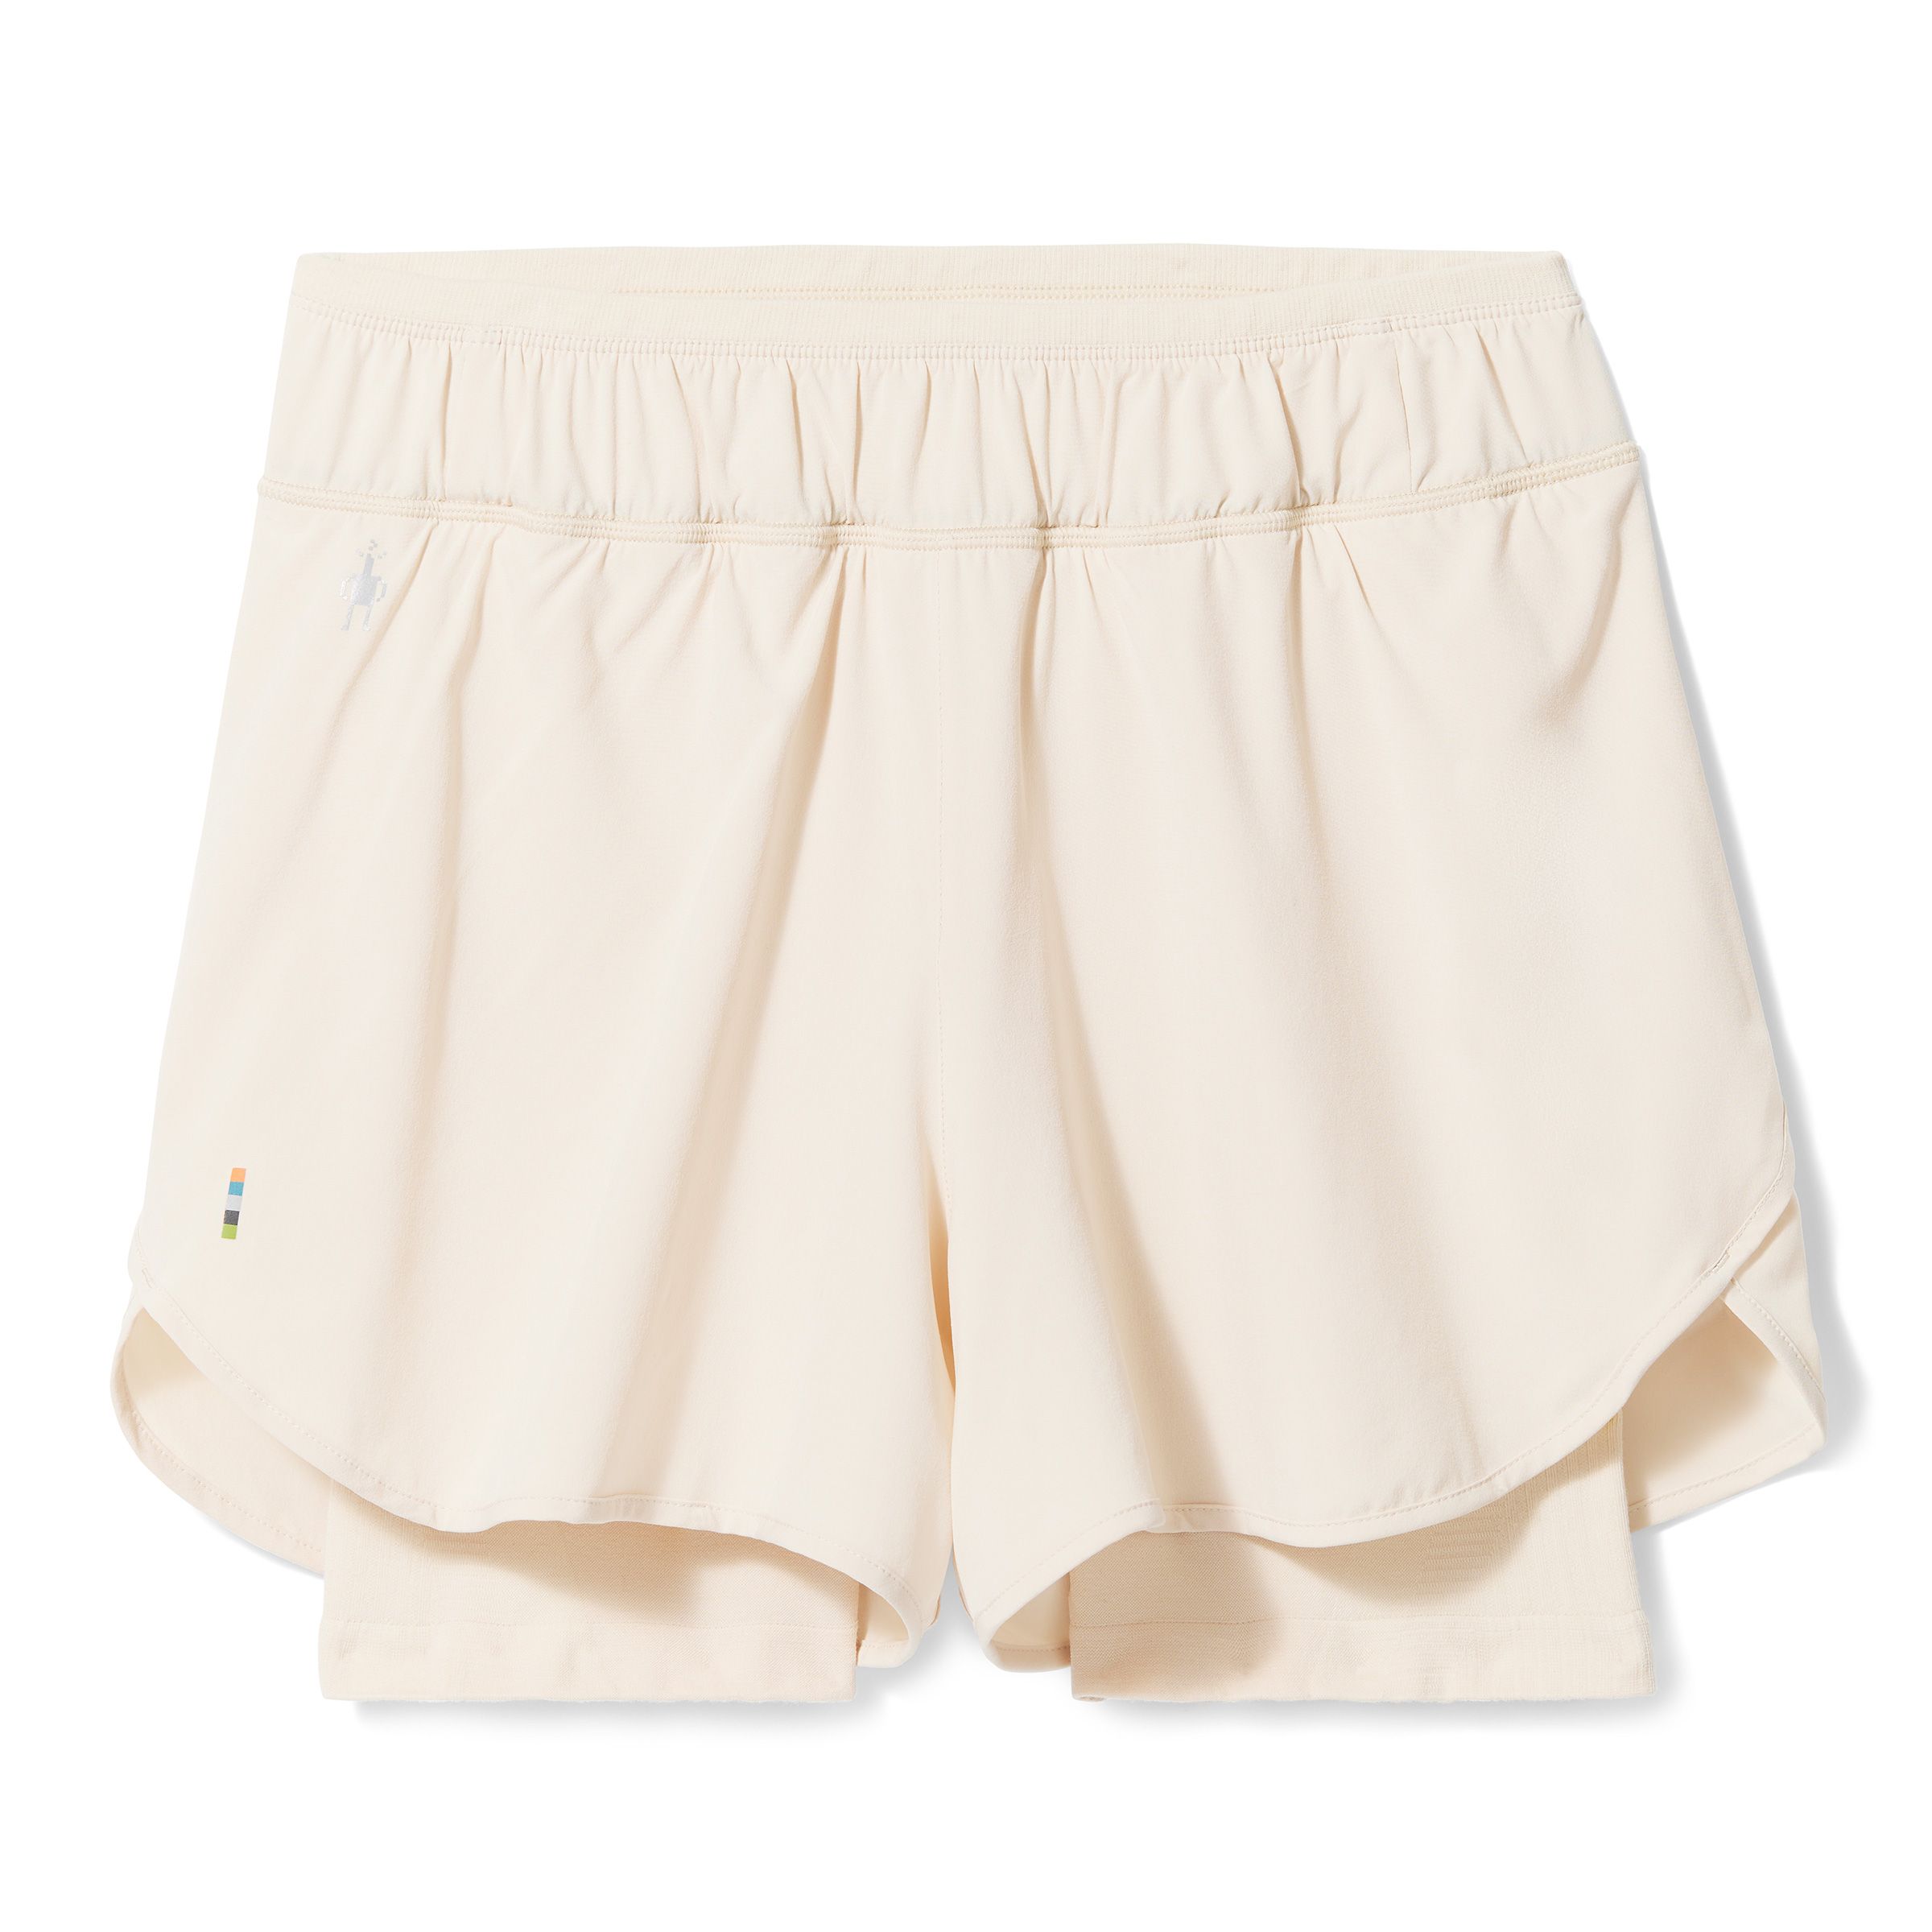 Aueoeo Comfy Shorts Women, Women's Summer Beach Shorts Cotton Line